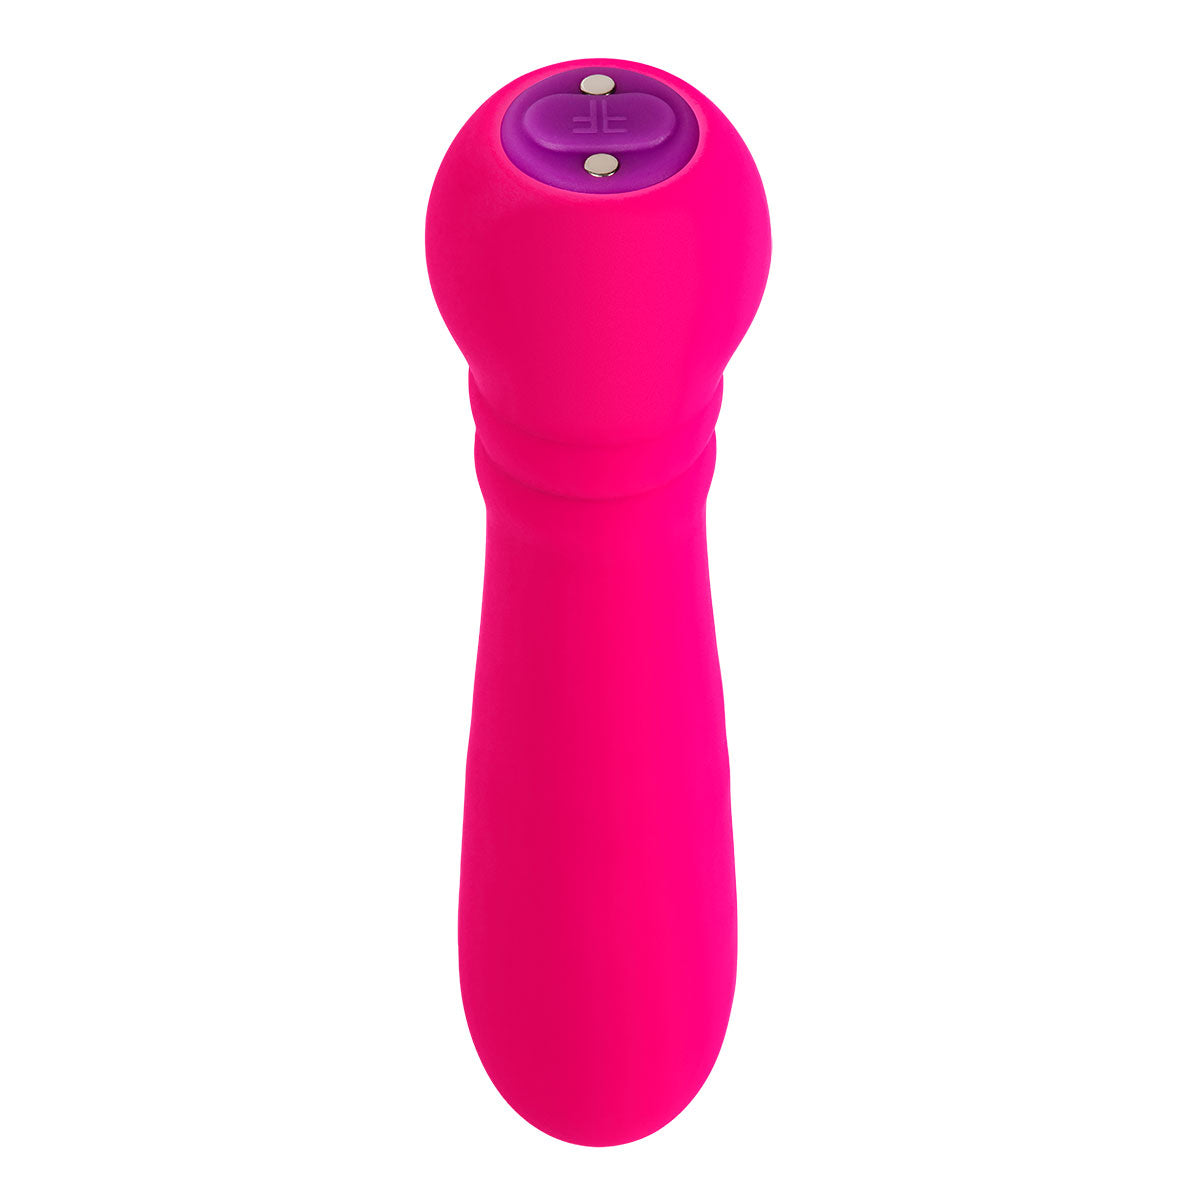 FemmeFunn Ultra Bullet Massager Rechargeable Silicone Vibrator Pink - Zateo Joy